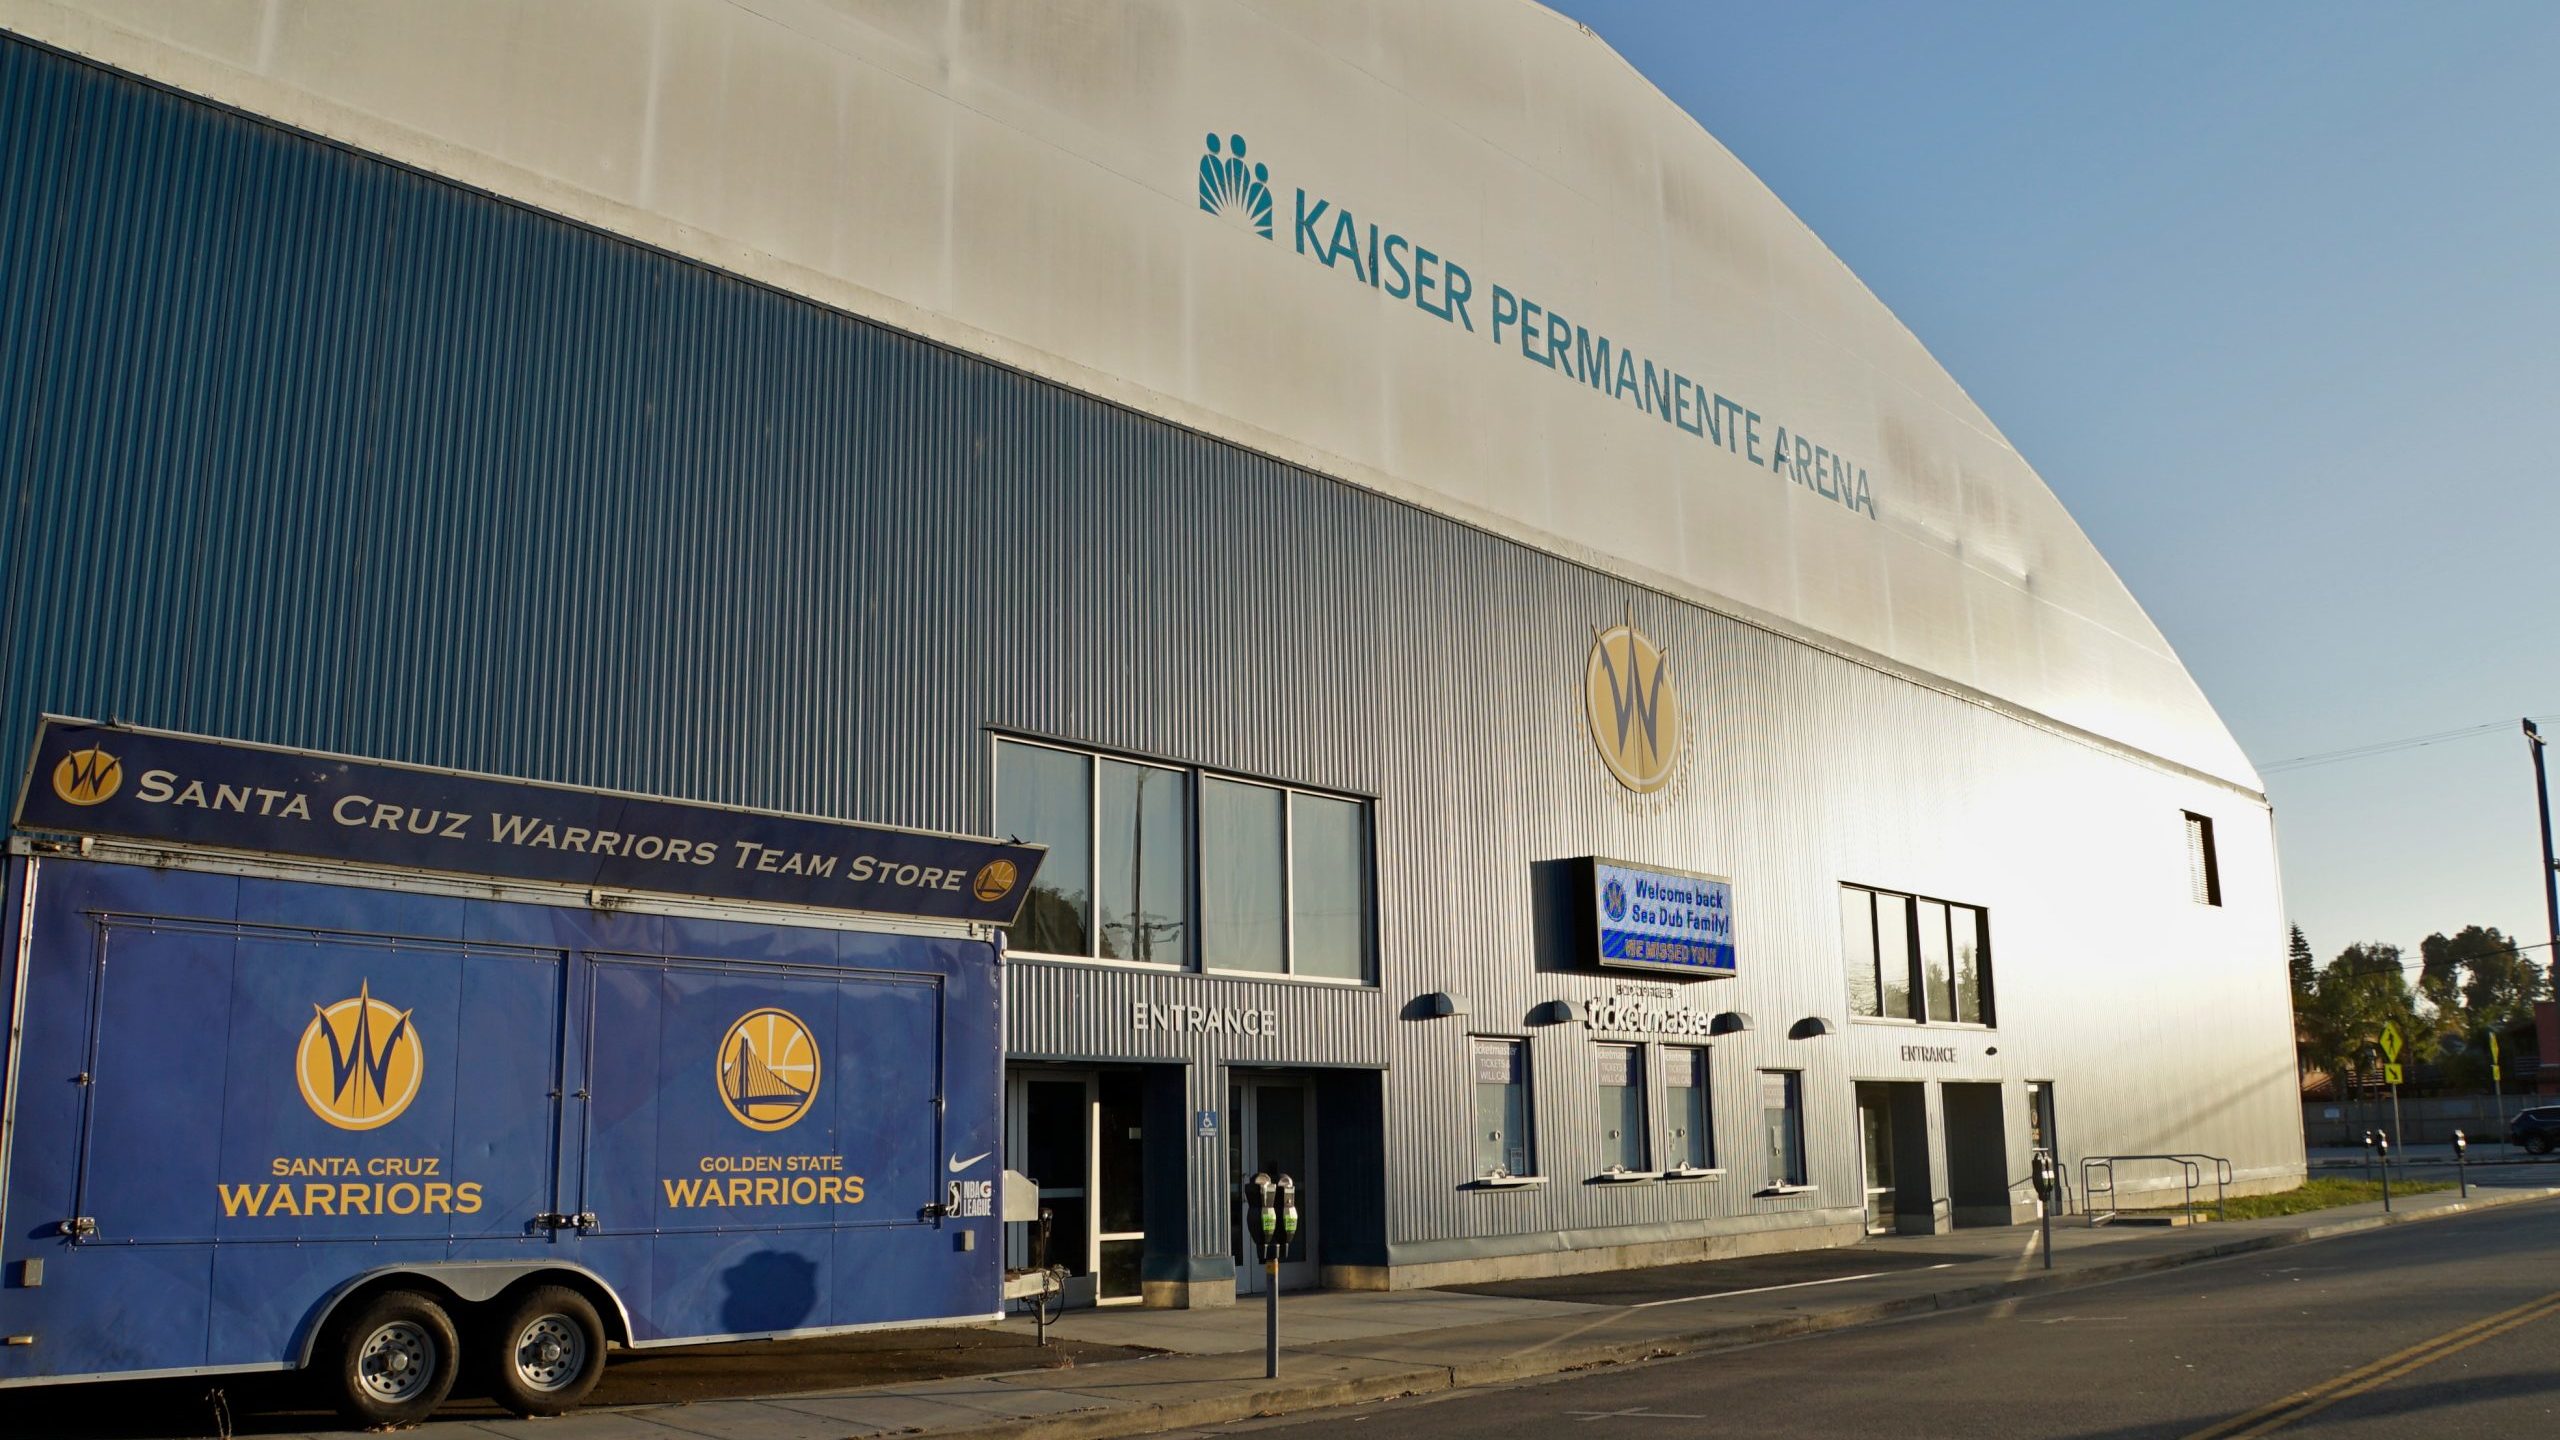 Kaiser Permanente arena in Santa Cruz